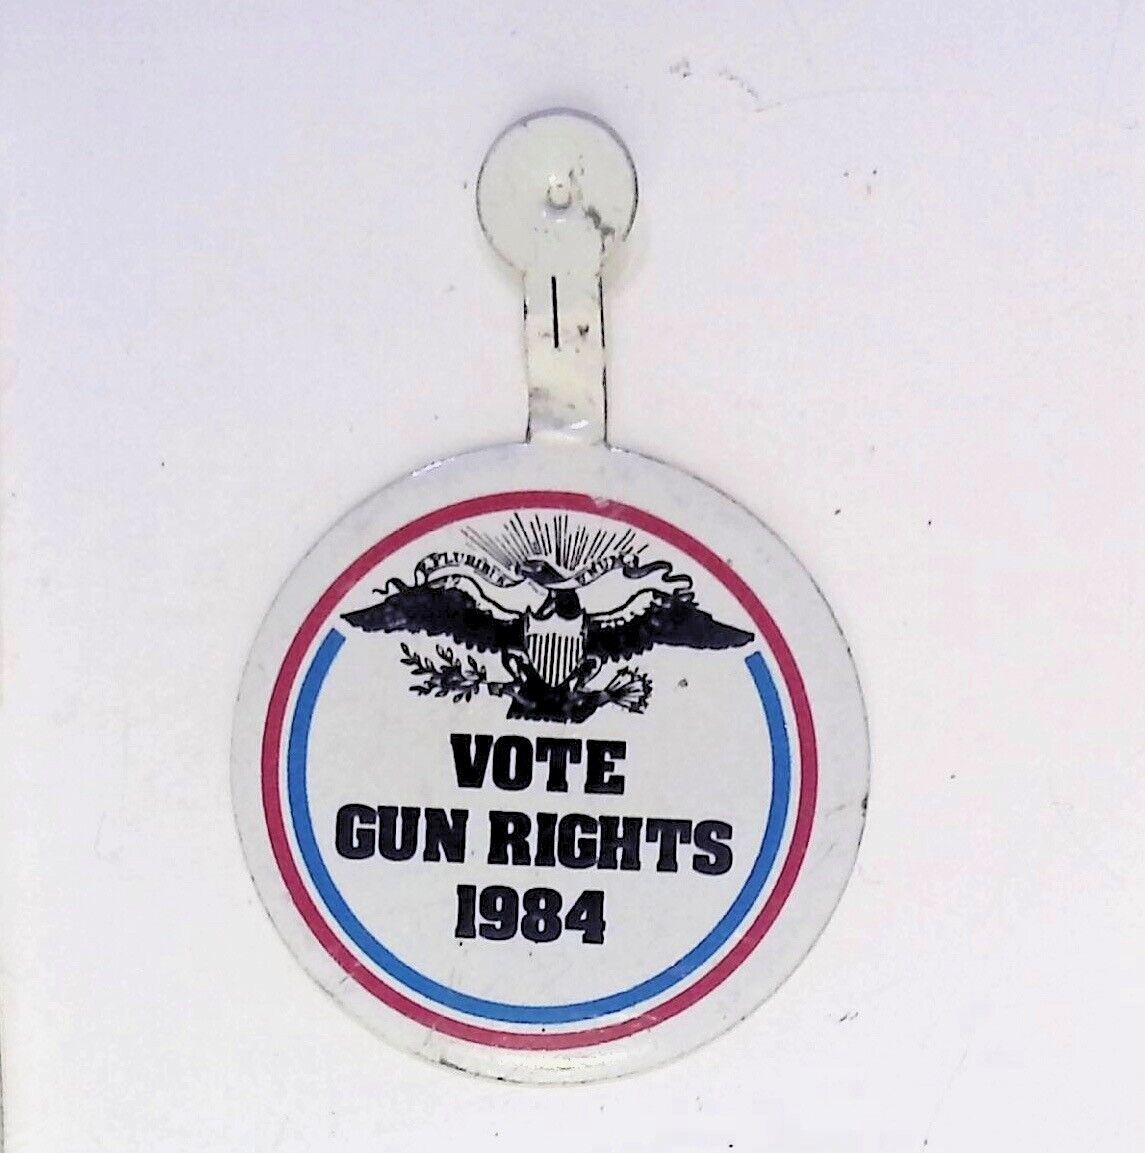 VOTE GUN RIGHTS 1984 VINTAGE BUTTON PIN ADVERTISING